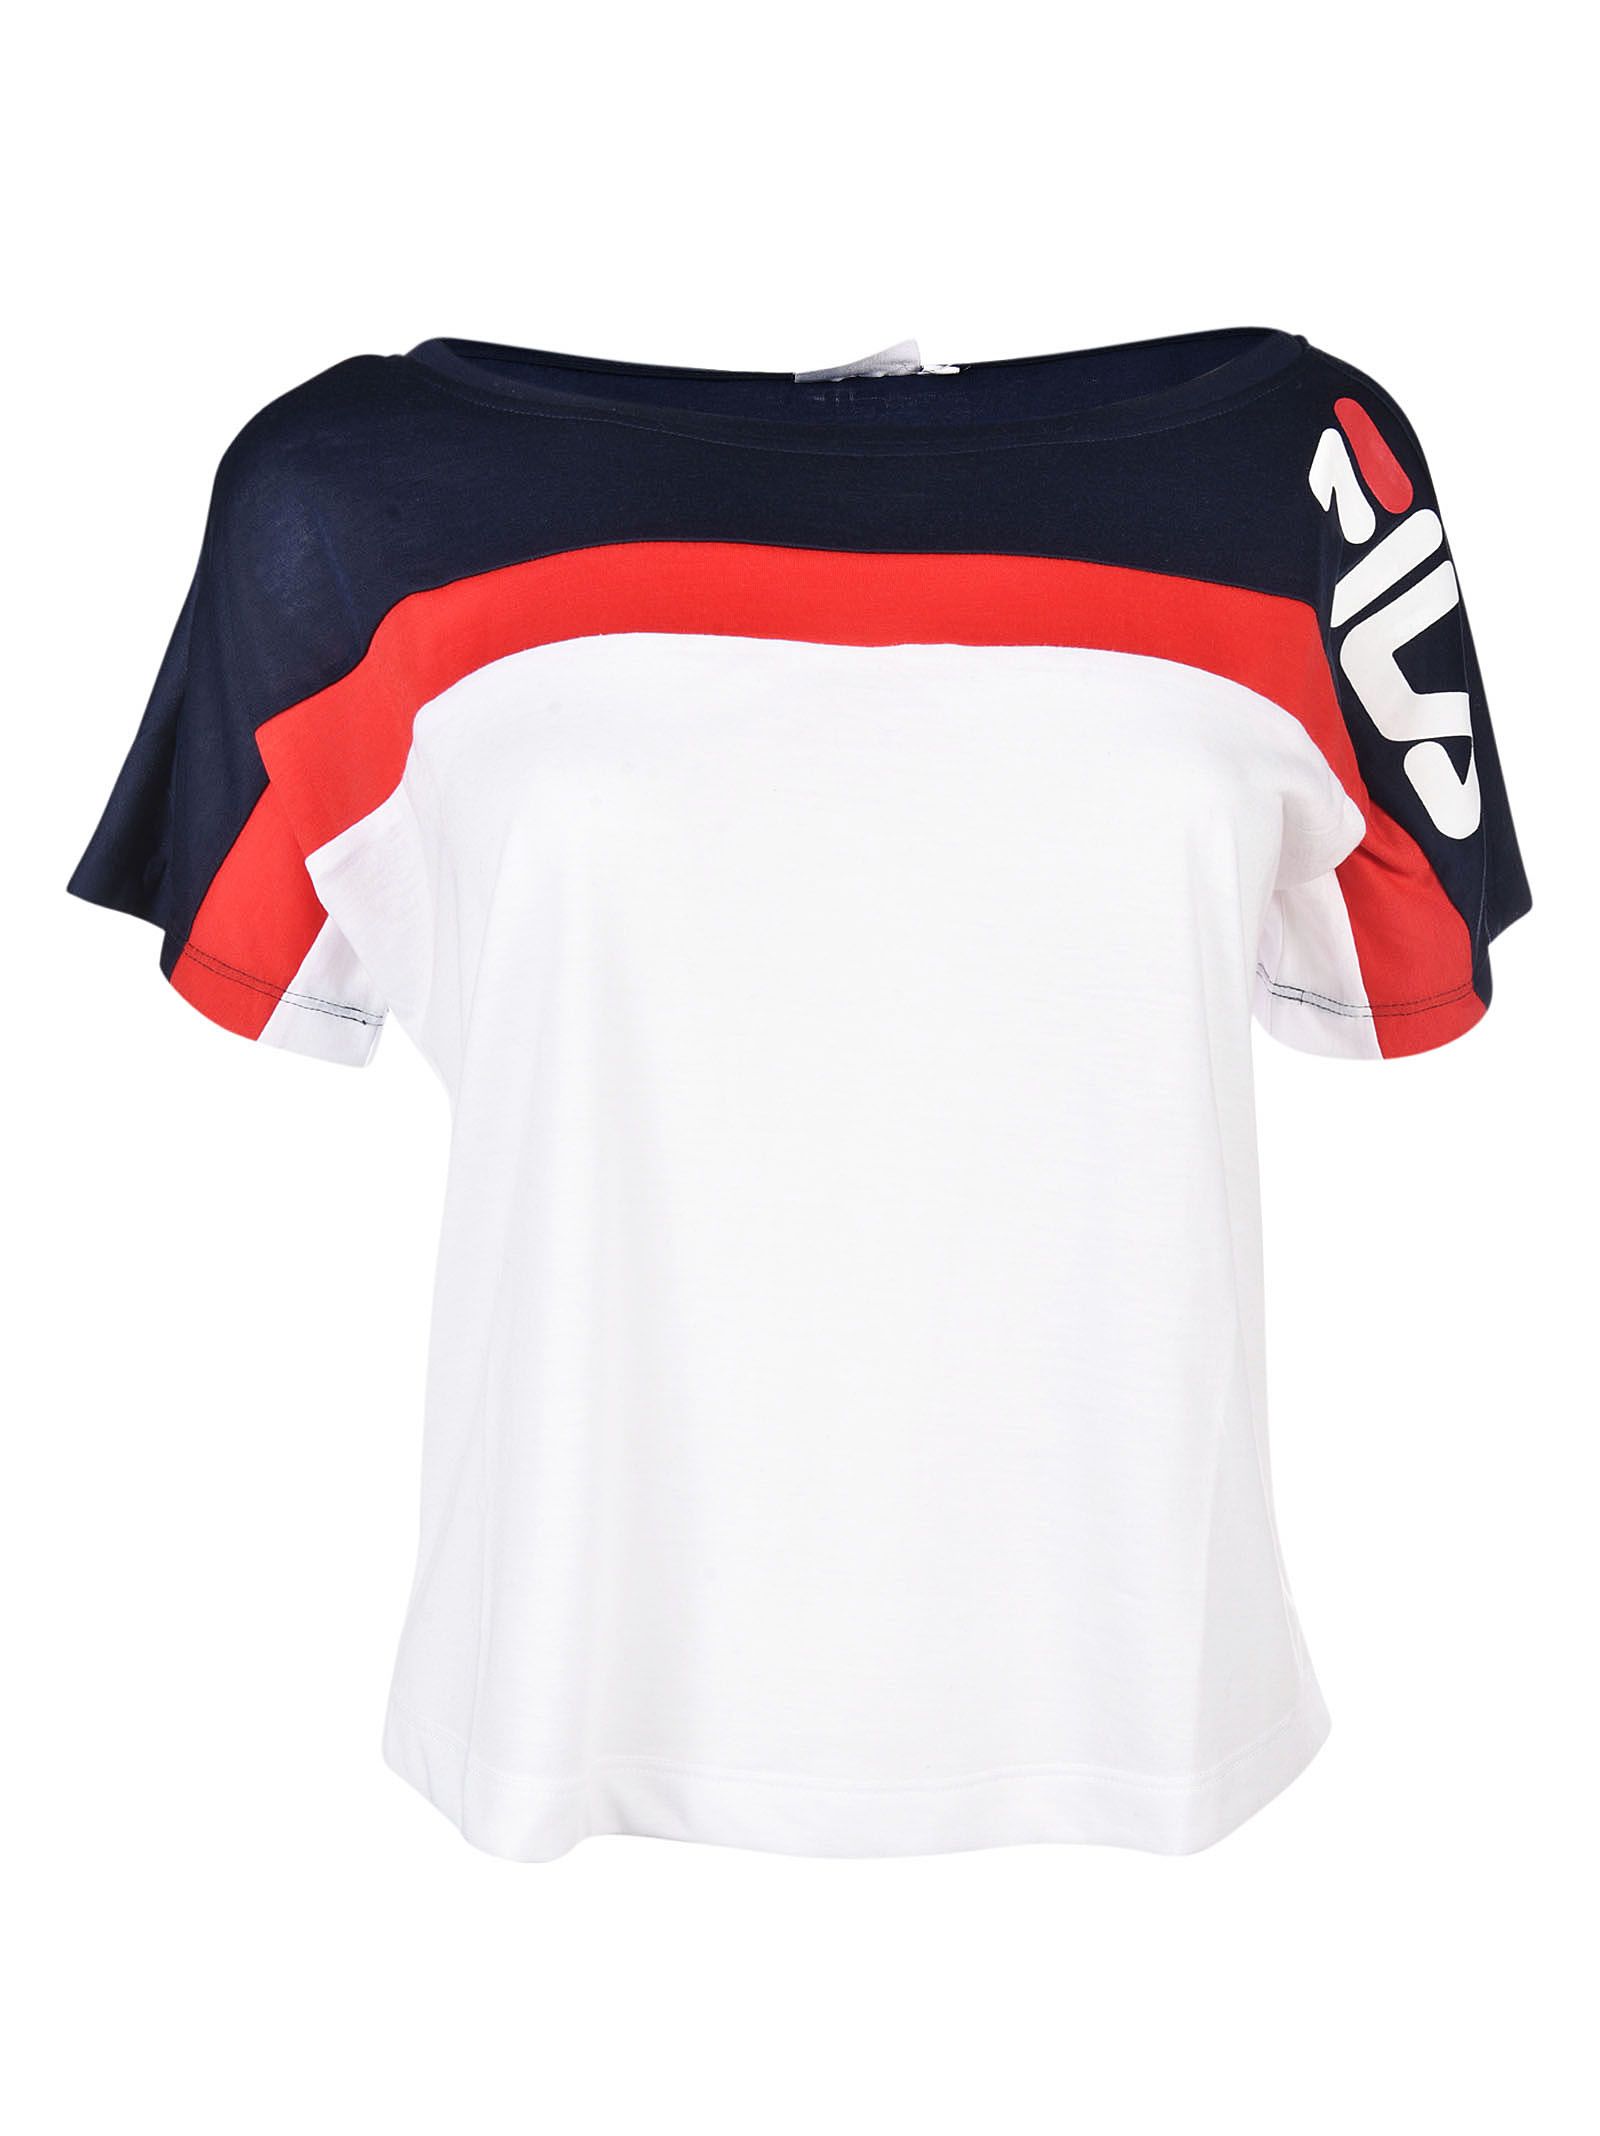 Fila Golf Shirts Kohls Agbu Hye Geen - kohls roblox shirts